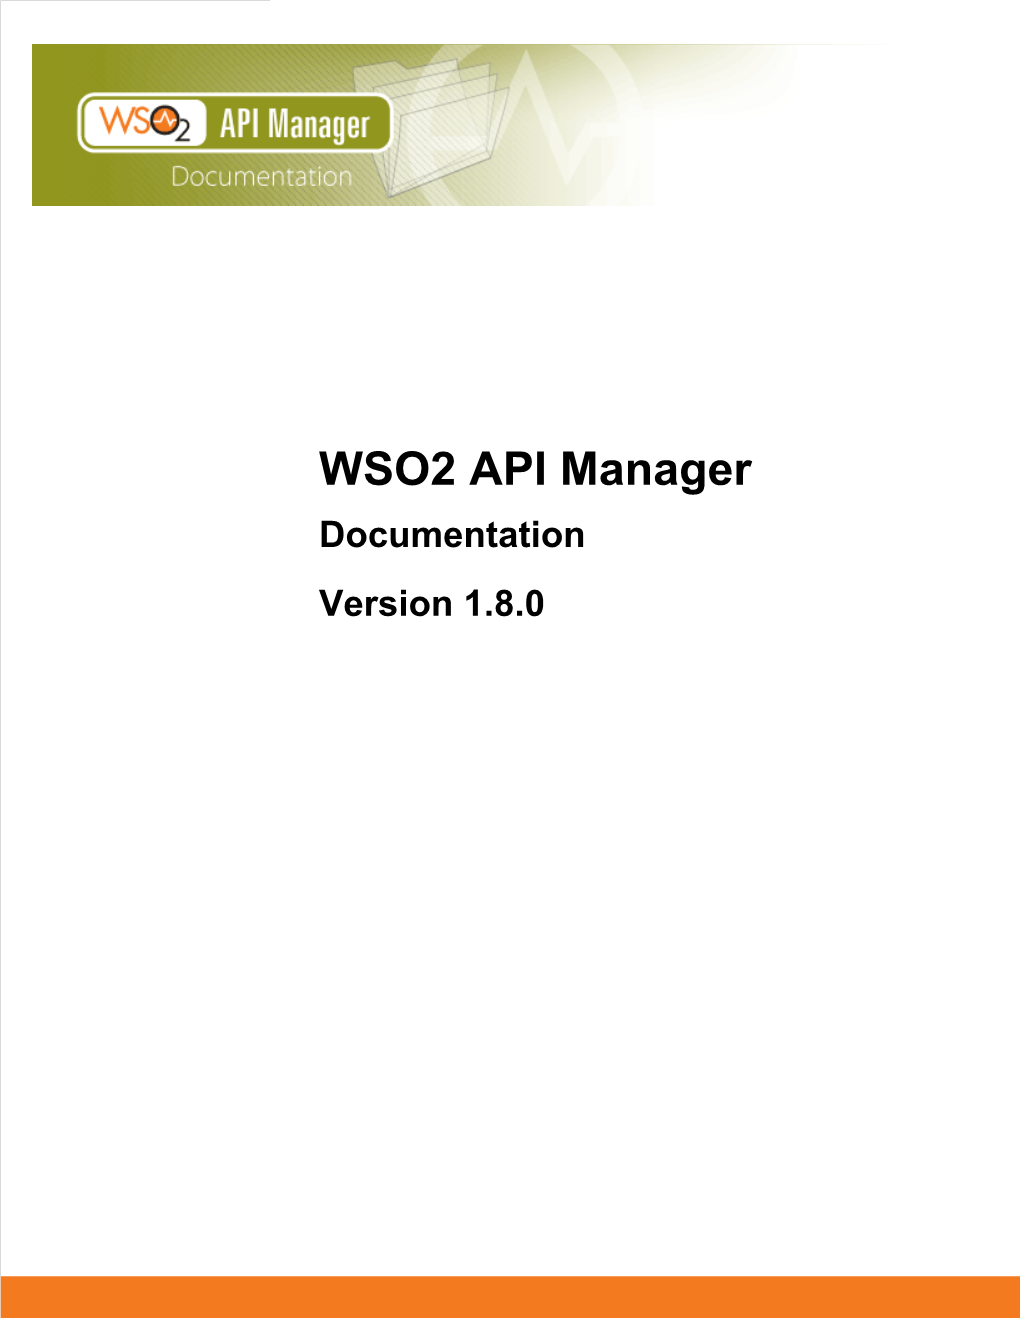 WSO2 API Manager, Version 1.8.0, WSO2 Inc